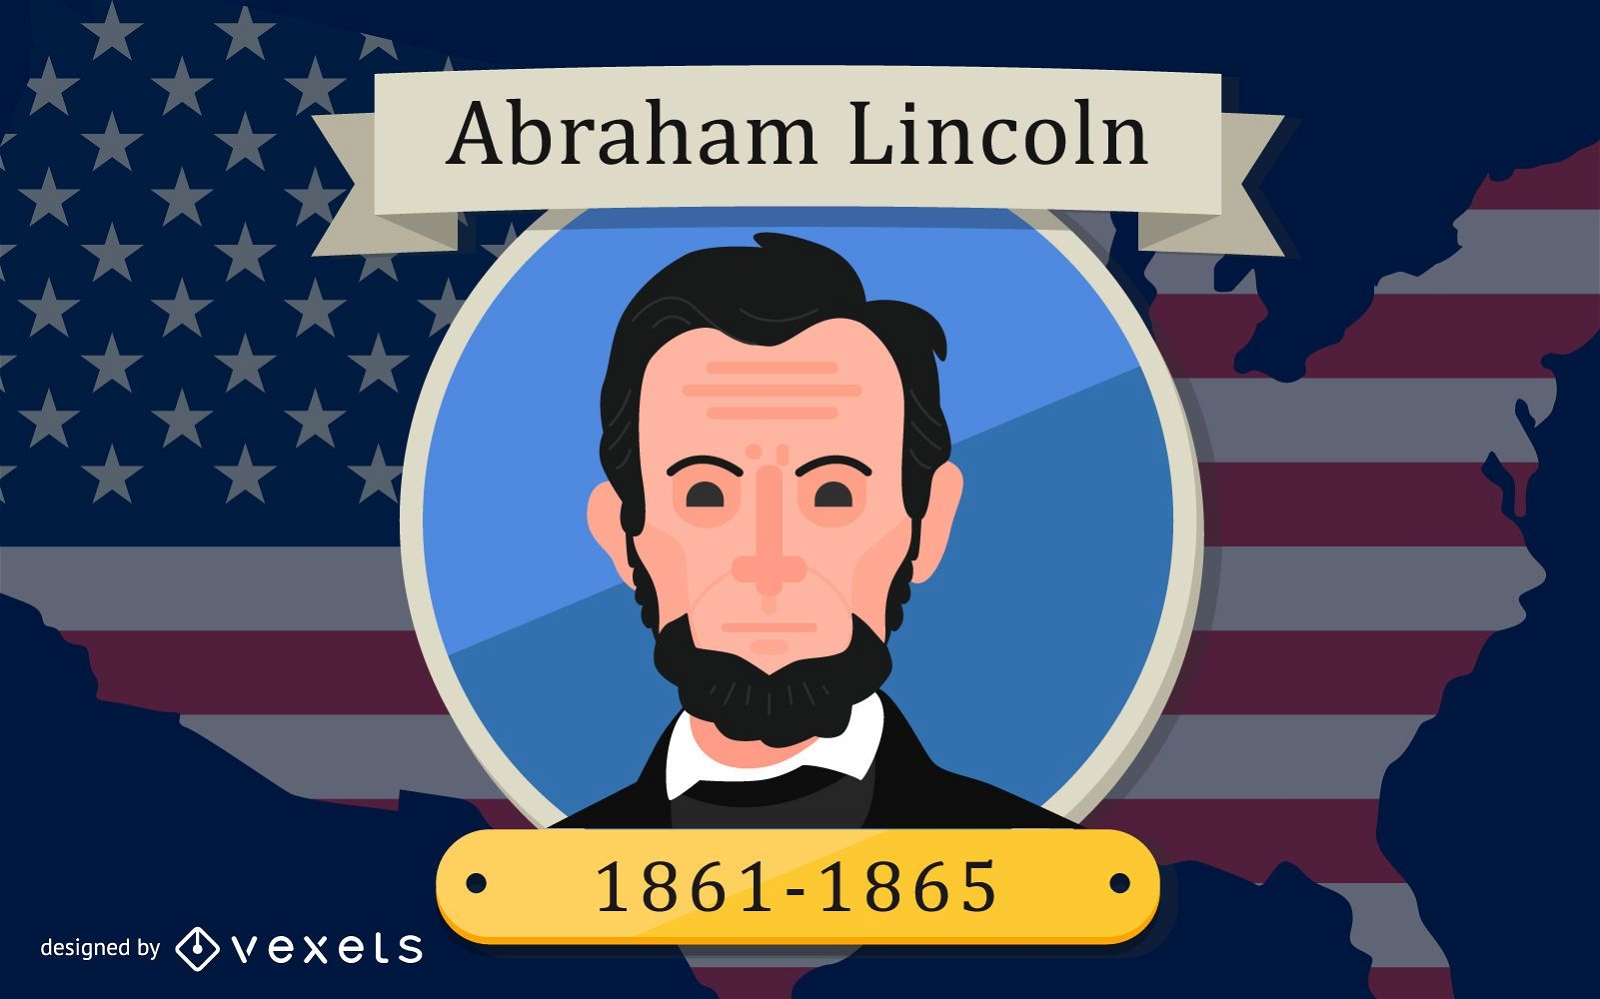 Abraham Lincoln design